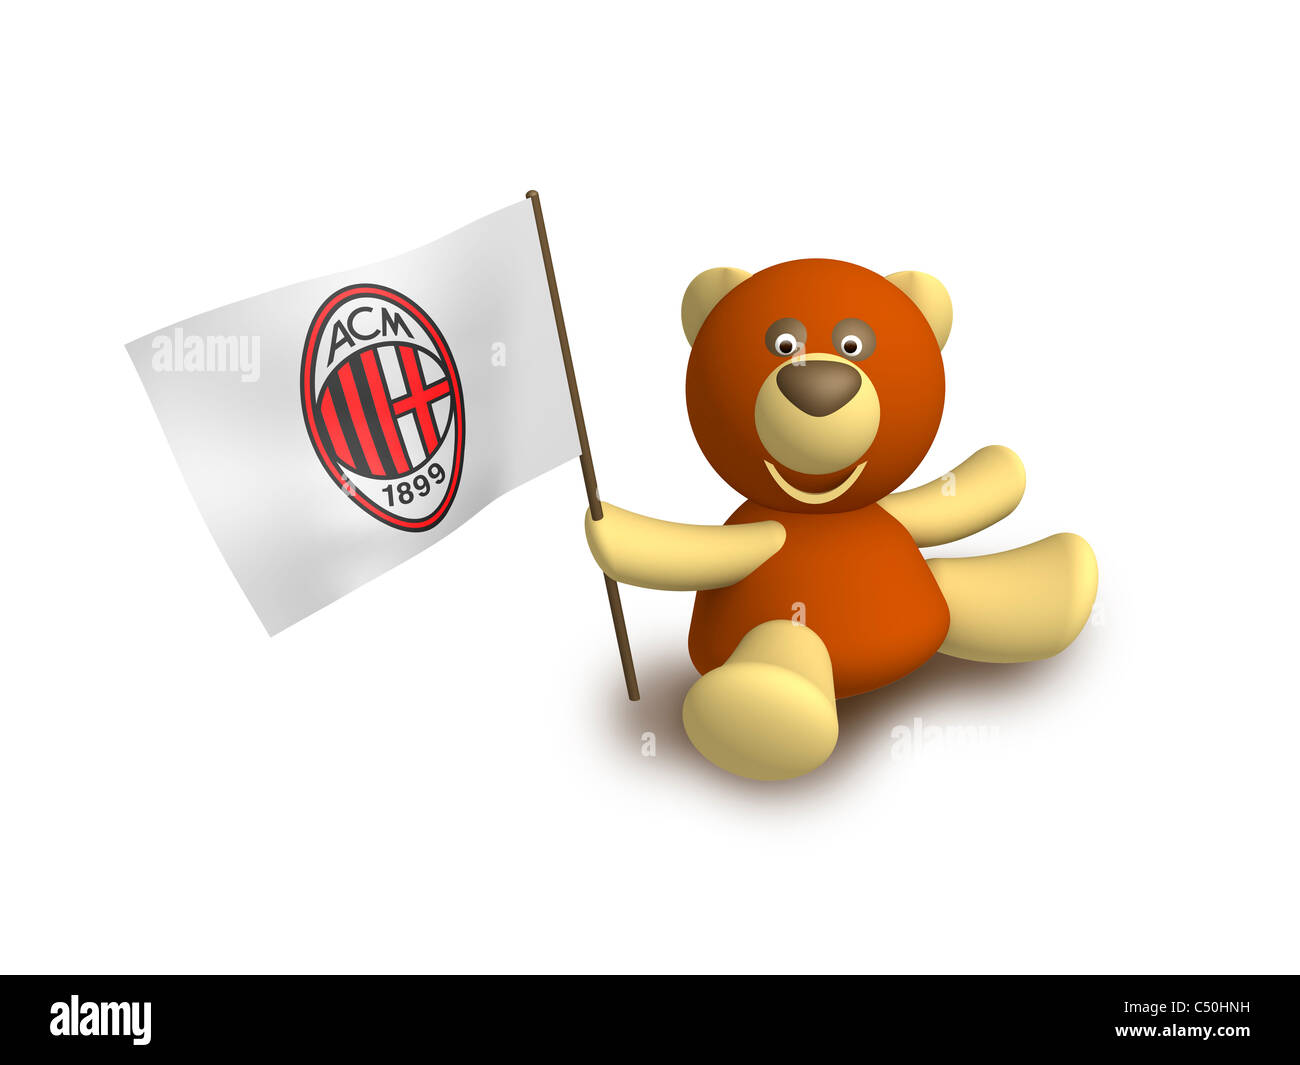 AC Mailand Logo Symbol Flaggensymbol Stockfoto